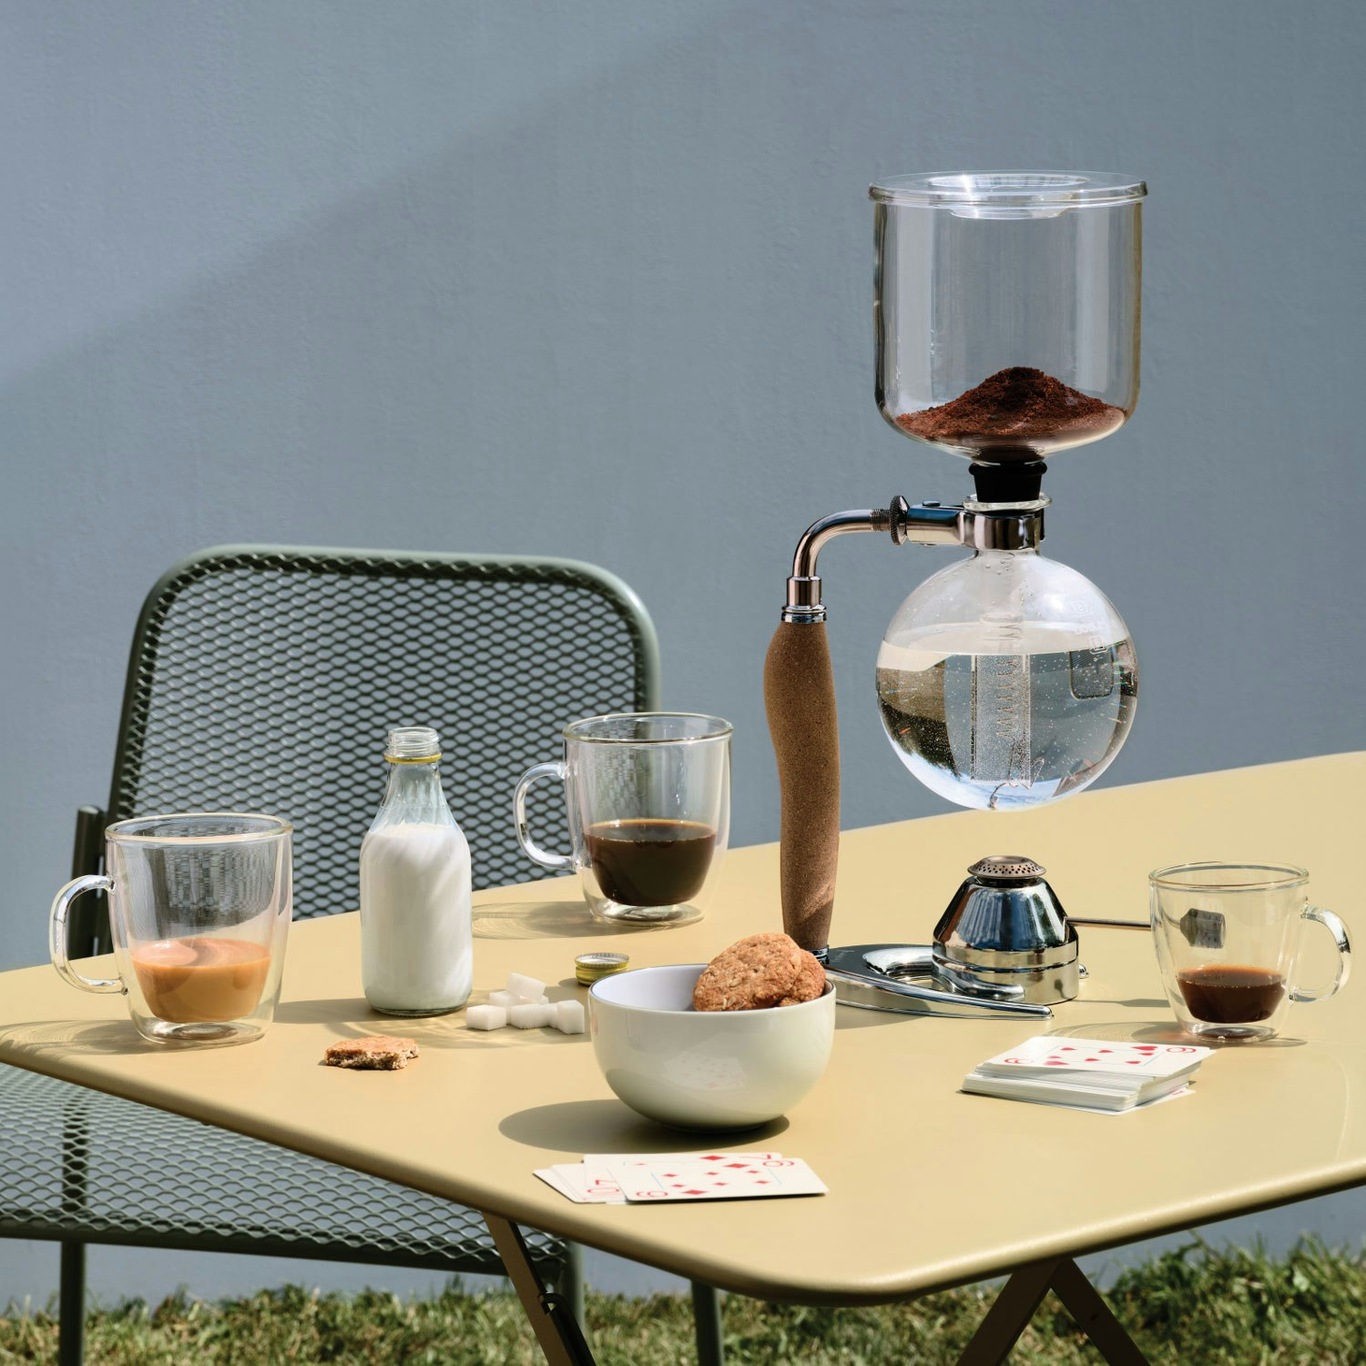 https://royaldesign.com/image/2/bodum-mocca-coffee-maker-1-l-gas-burner-0?w=800&quality=80